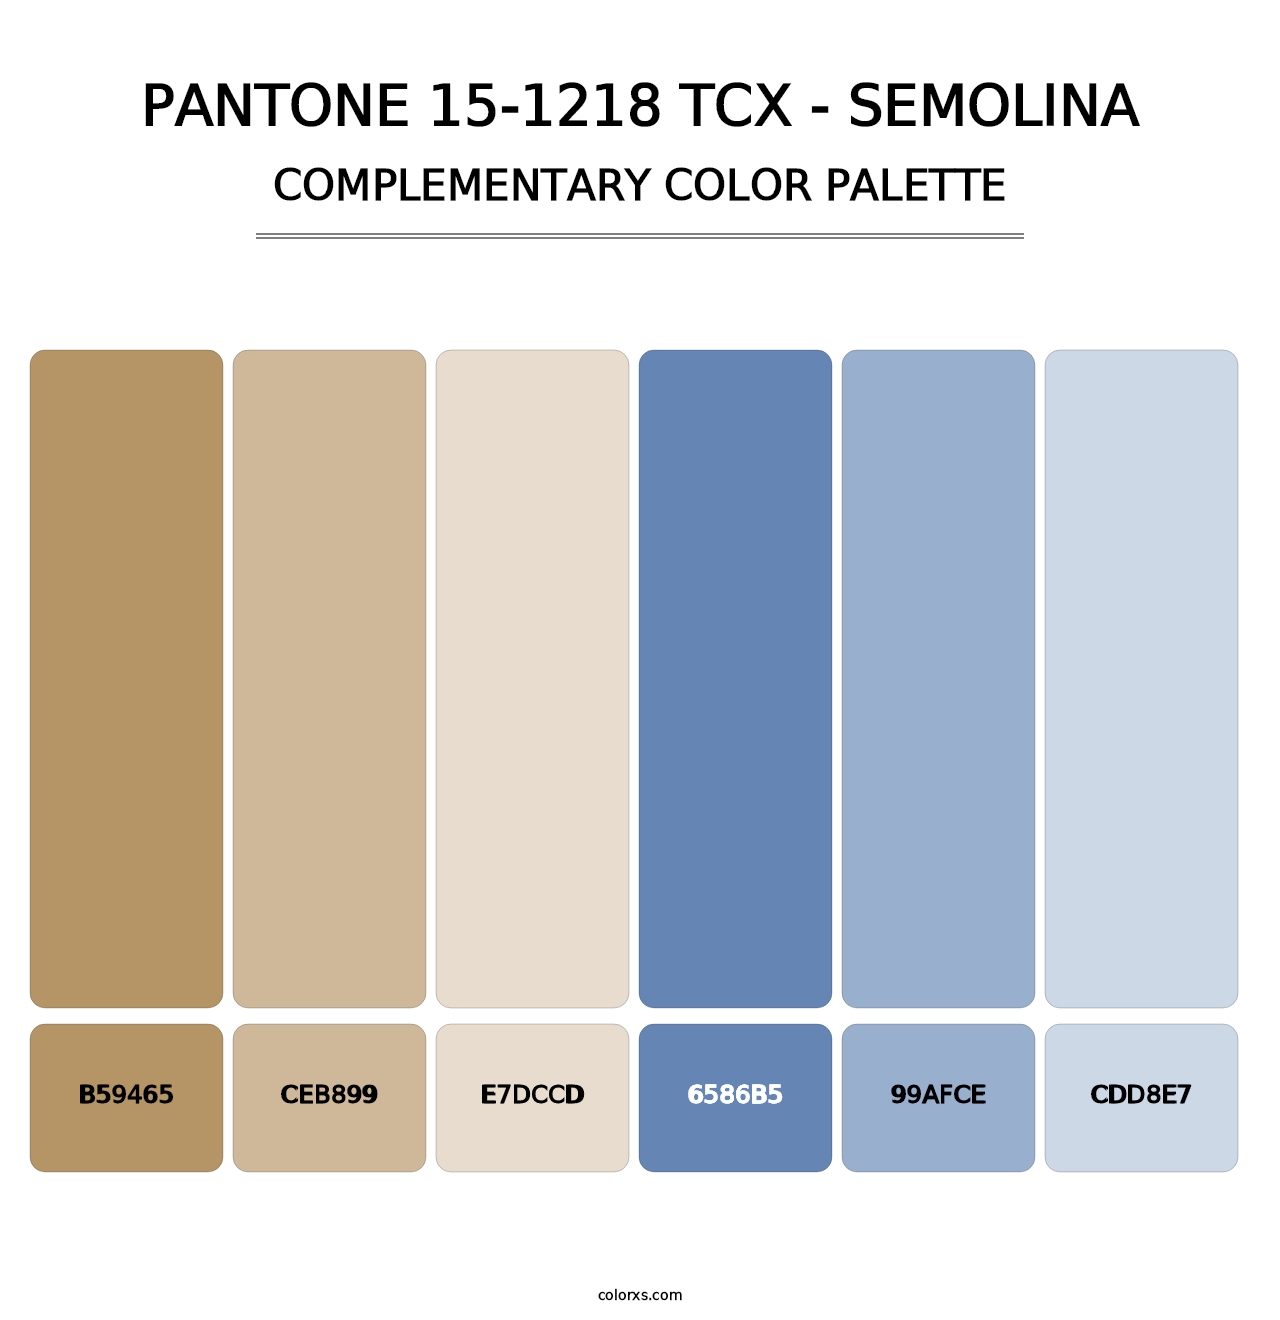 PANTONE 15-1218 TCX - Semolina - Complementary Color Palette